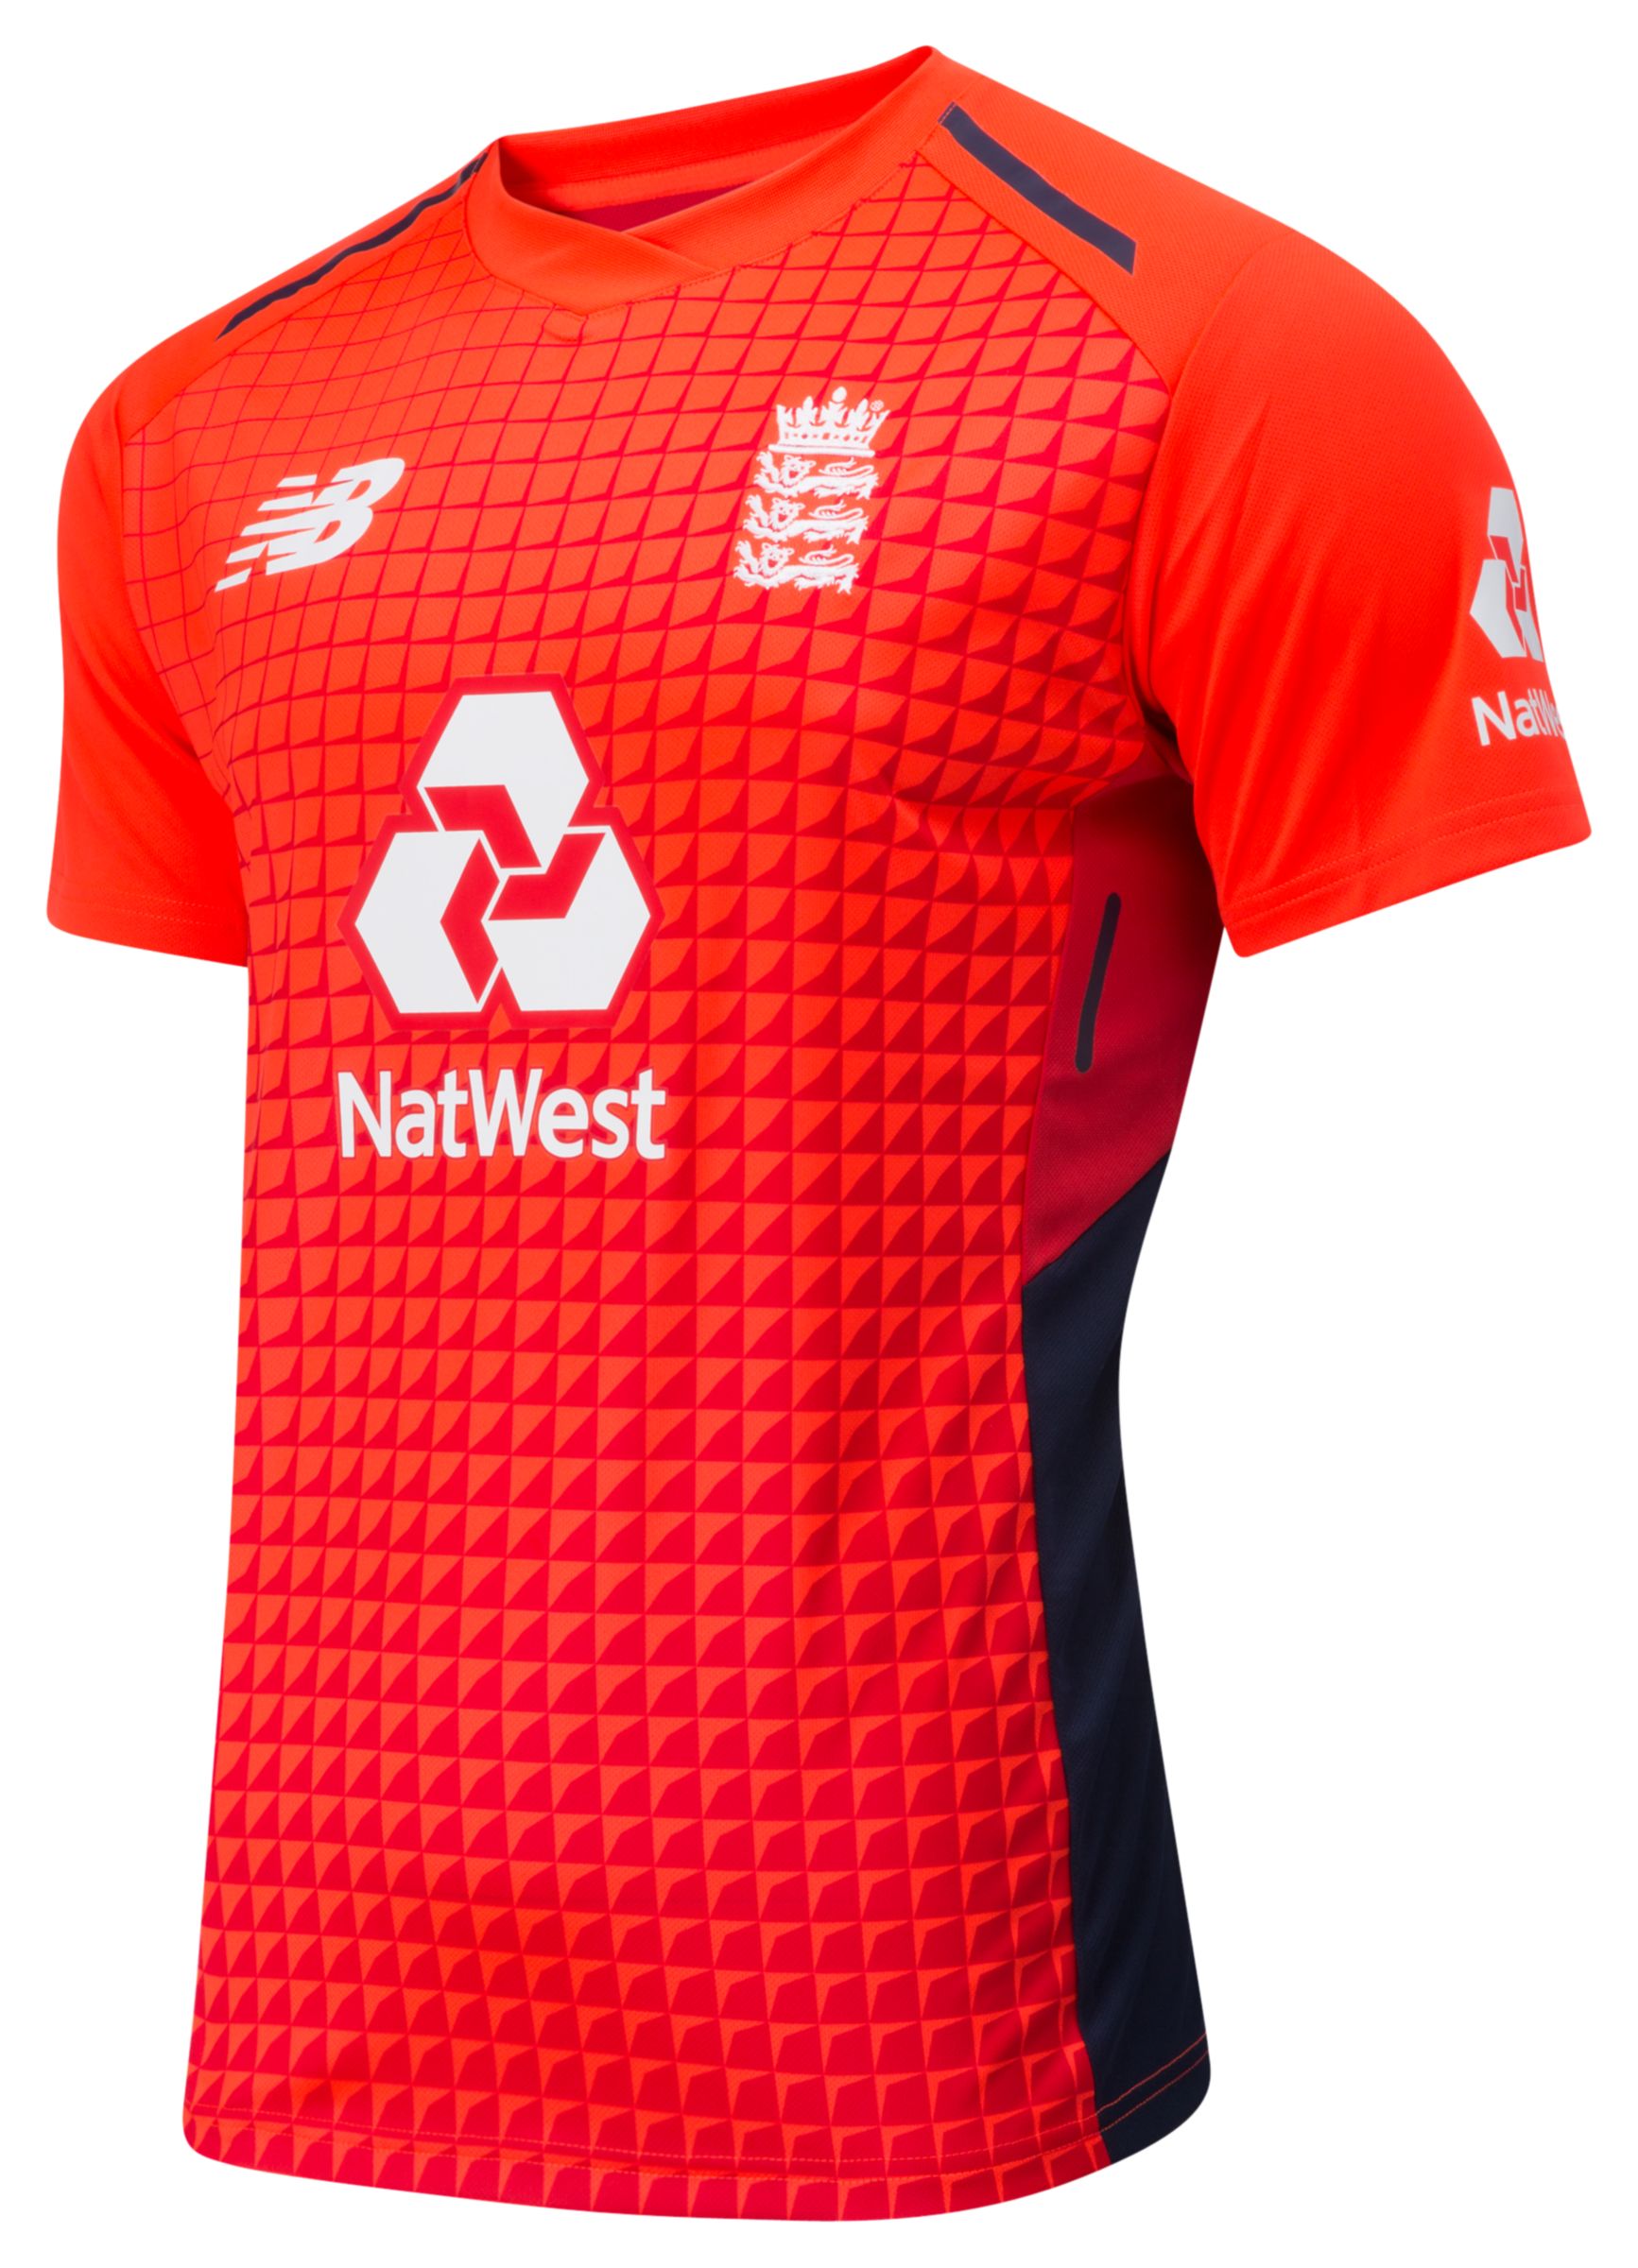 new balance england cricket training t shirt